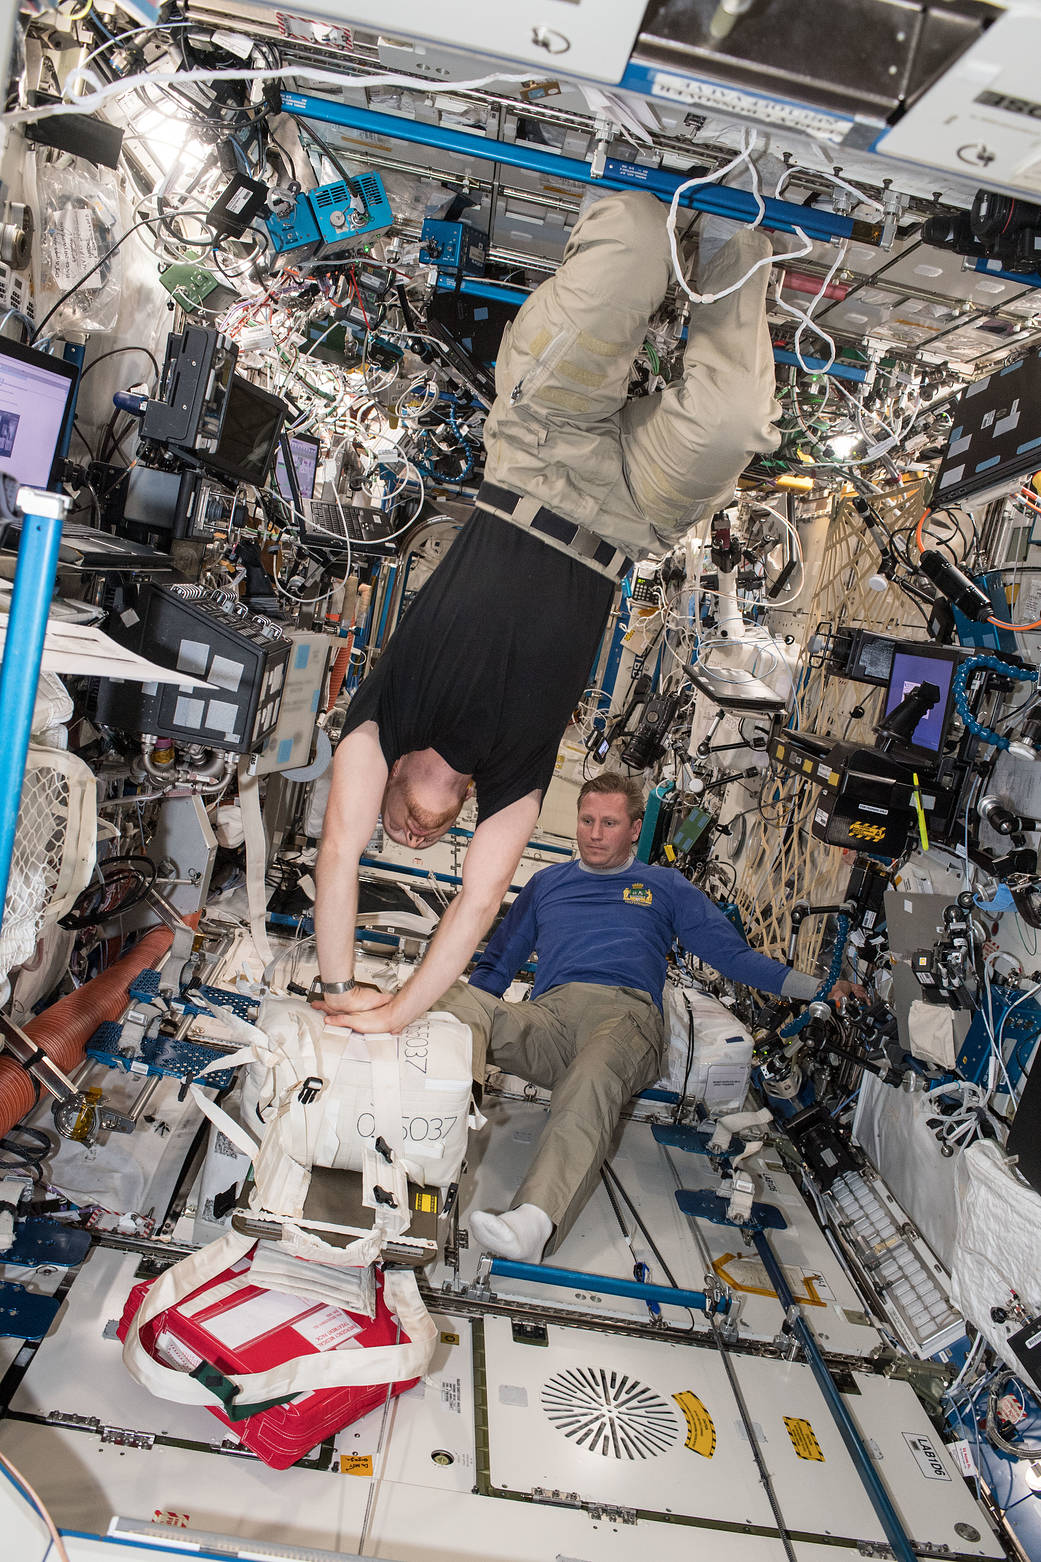 Astronaut Alexander Gerst practices CPR as cosmonaut Sergey Prokopev looks on